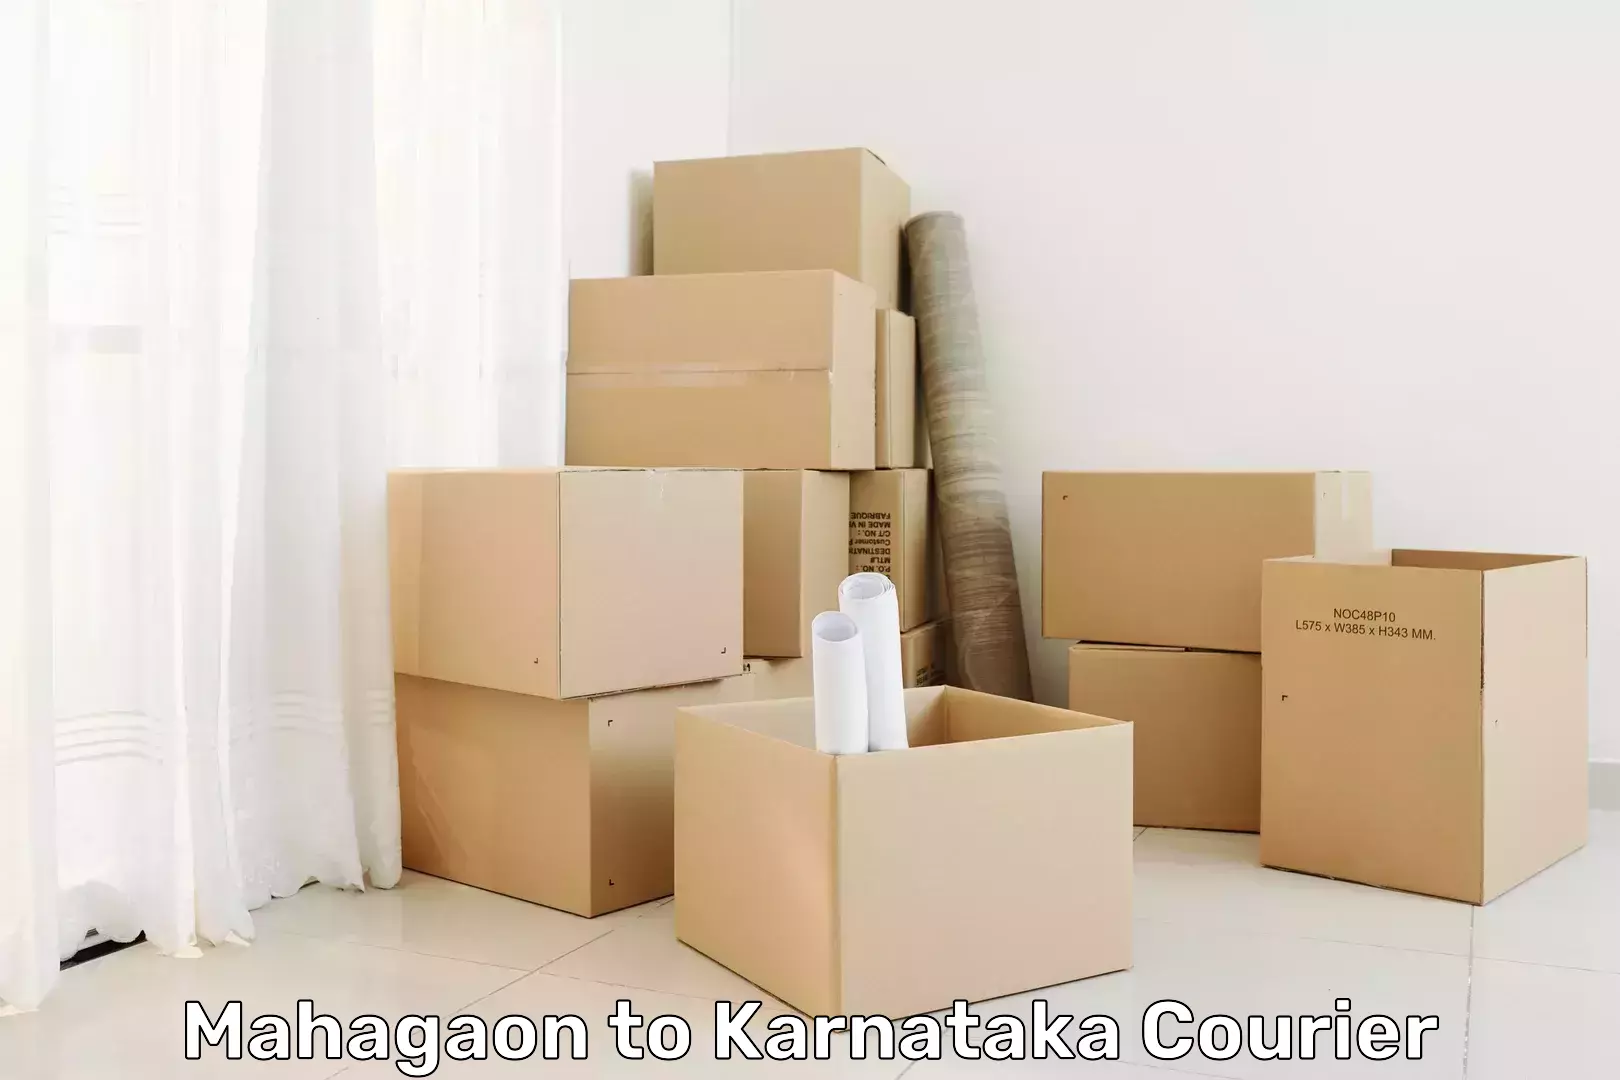 Modern courier technology Mahagaon to Karnataka